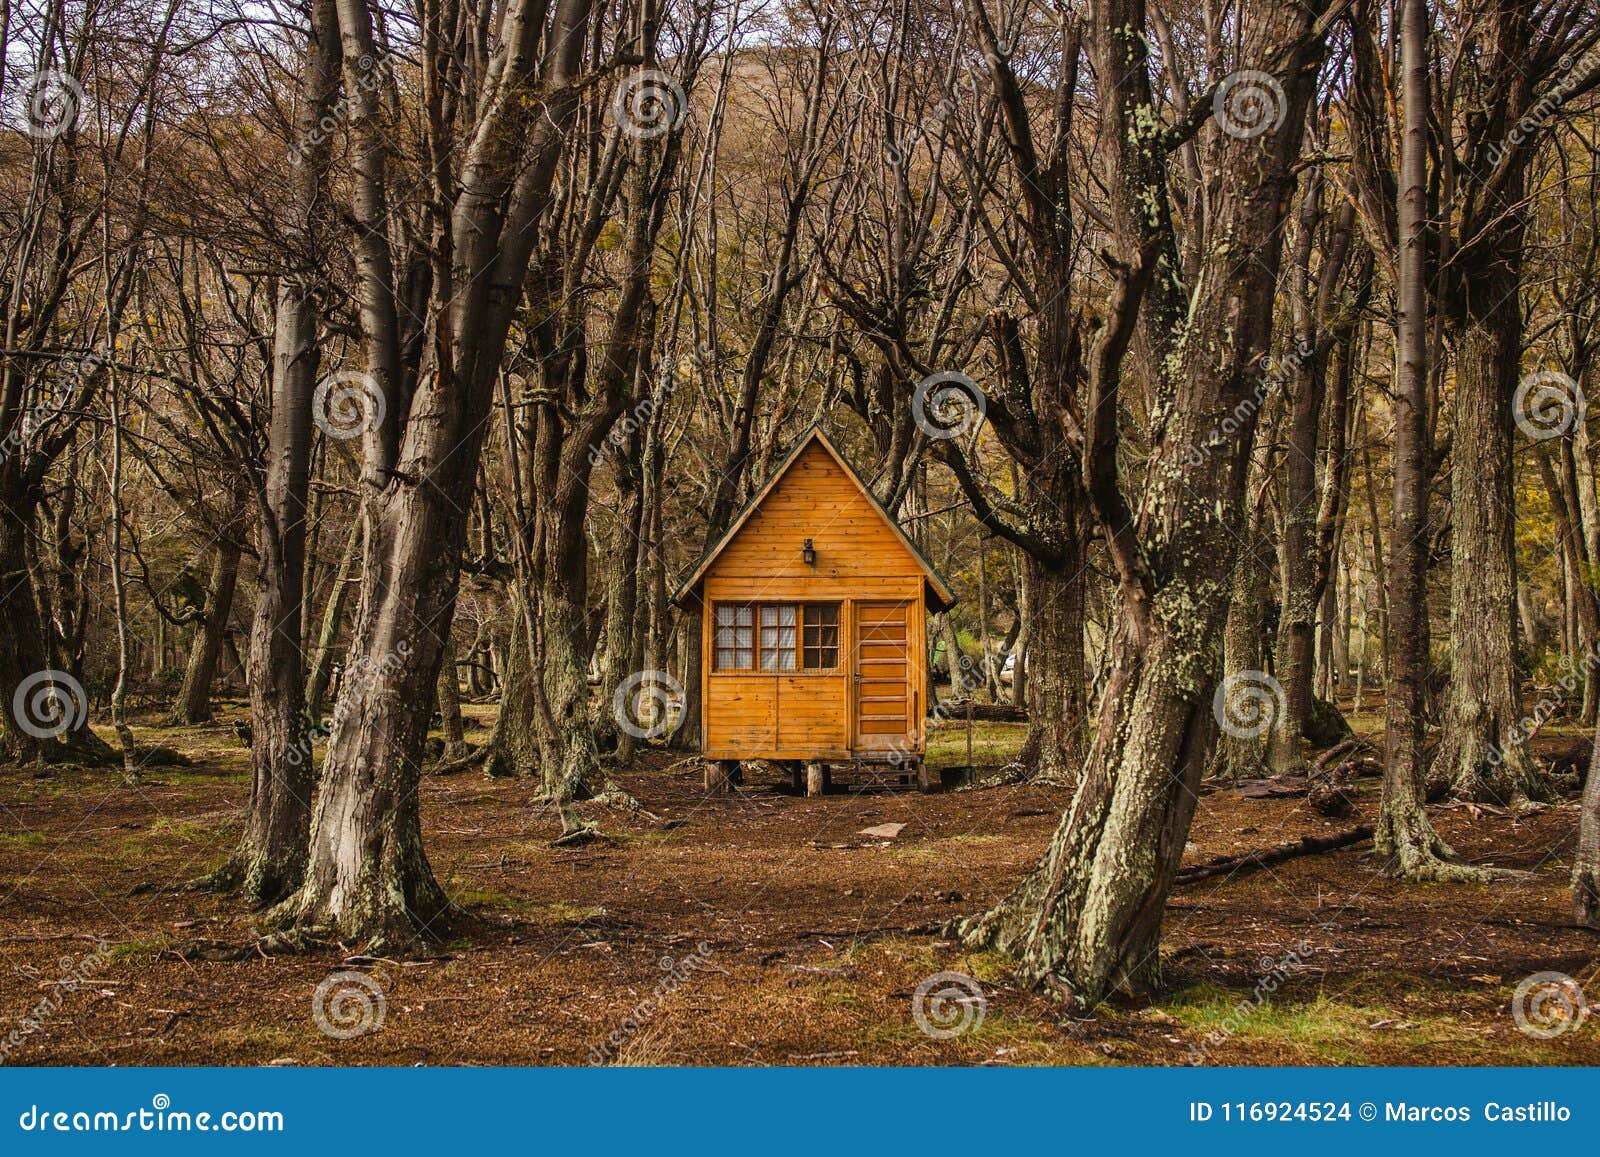 log cabin in forest tierra del fuego patagonia argentina